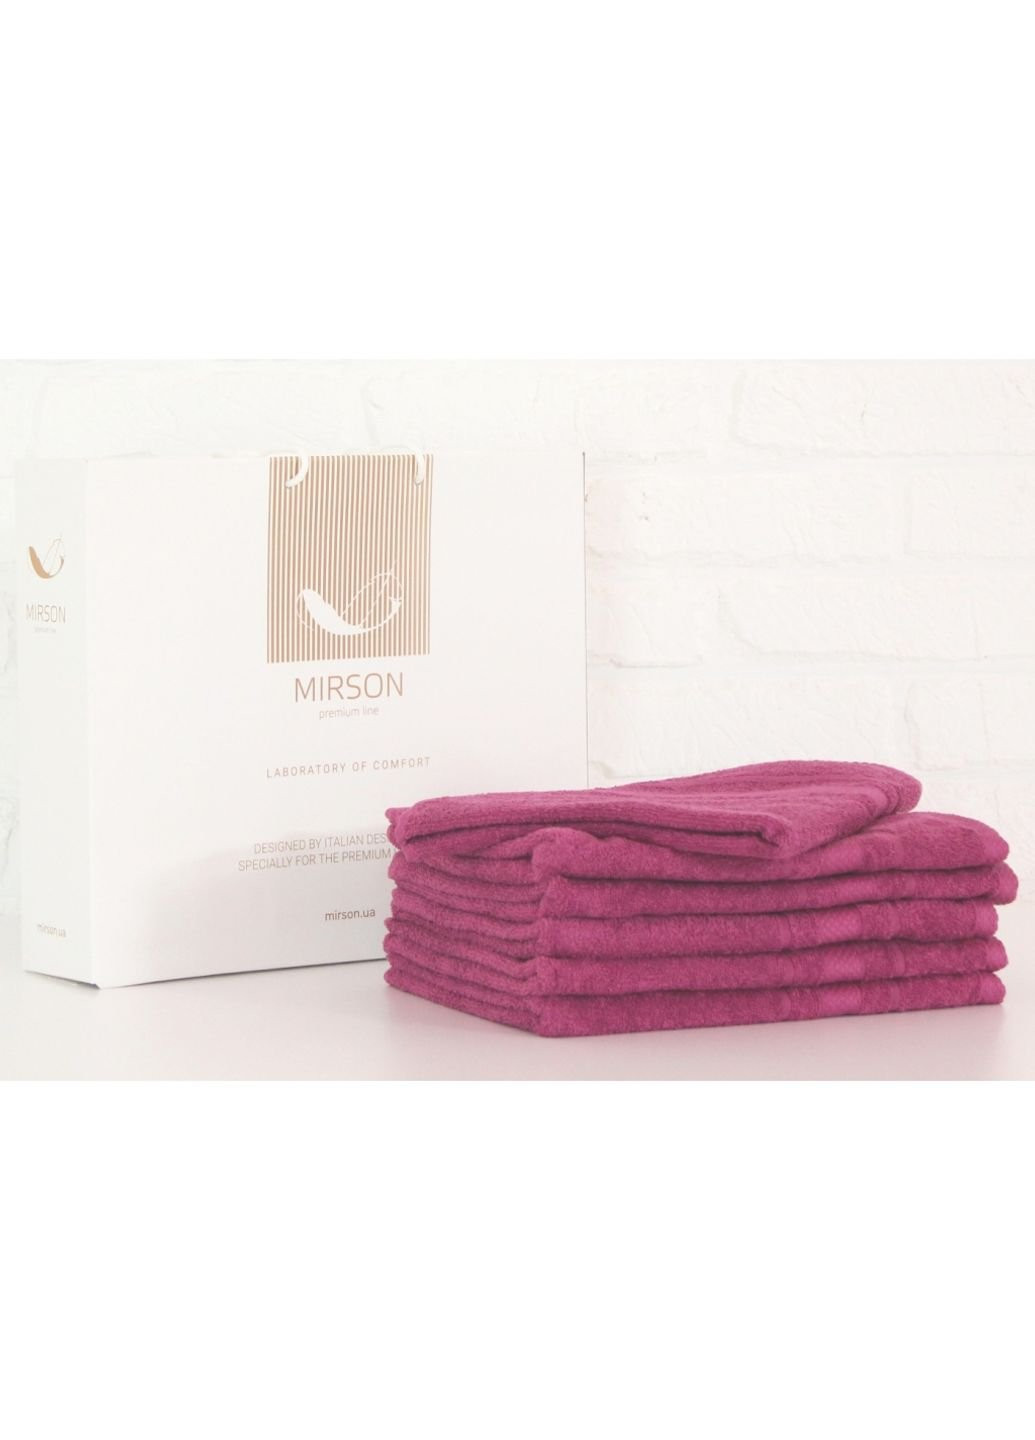 No Brand полотенце mirson набор банных №5081 elite softness plum 50х90 6 шт (2200003524055) малиновый производство - Украина